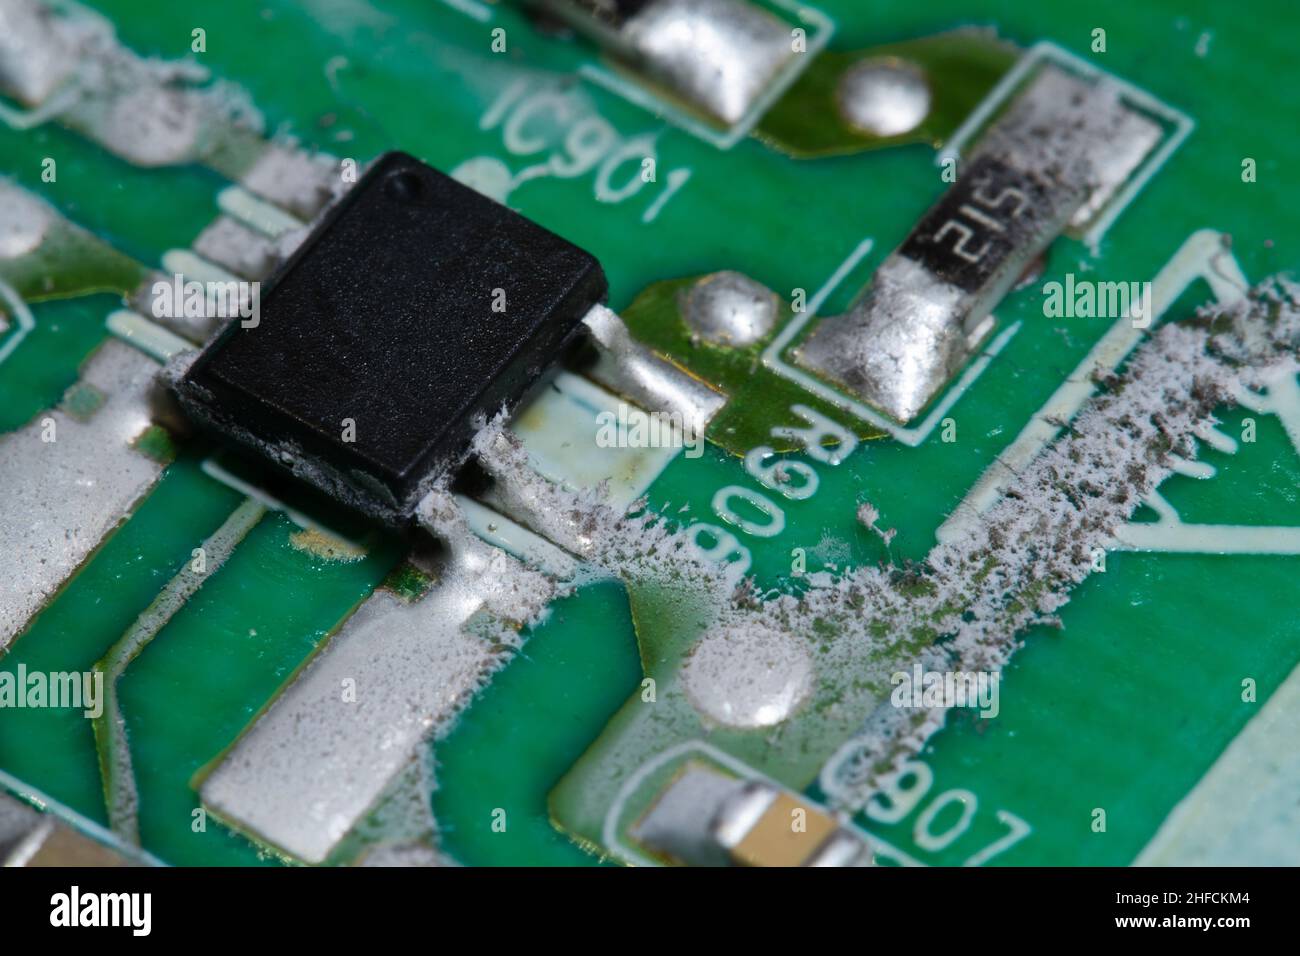 Damaged printed circuit board (PCB). Stock Photo